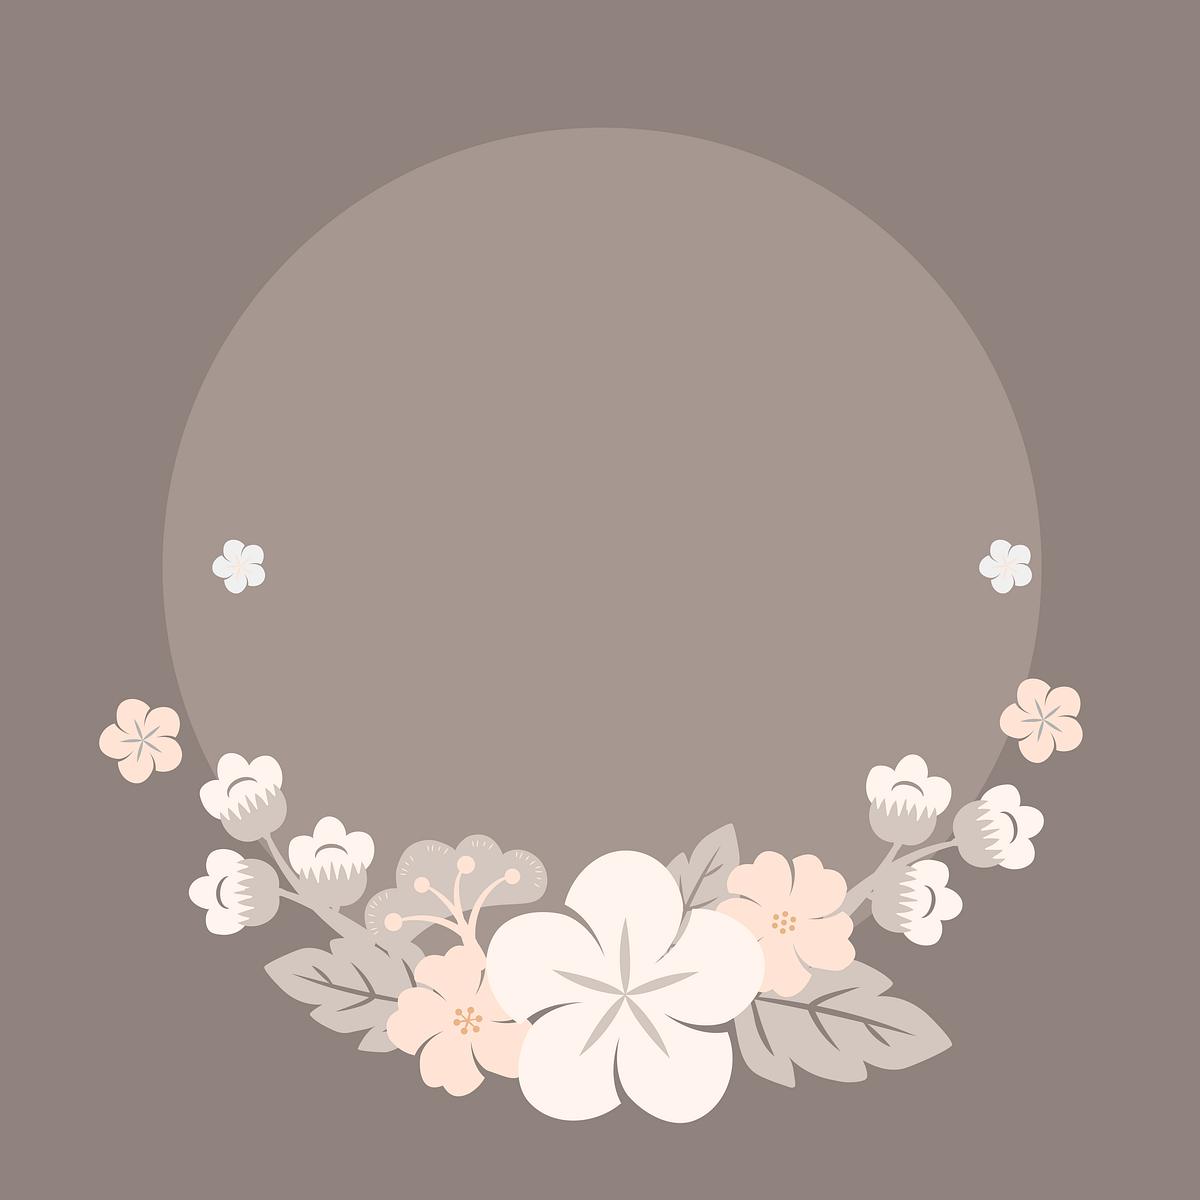 Japanese pastel flowers frame | Free stock vector - 553129